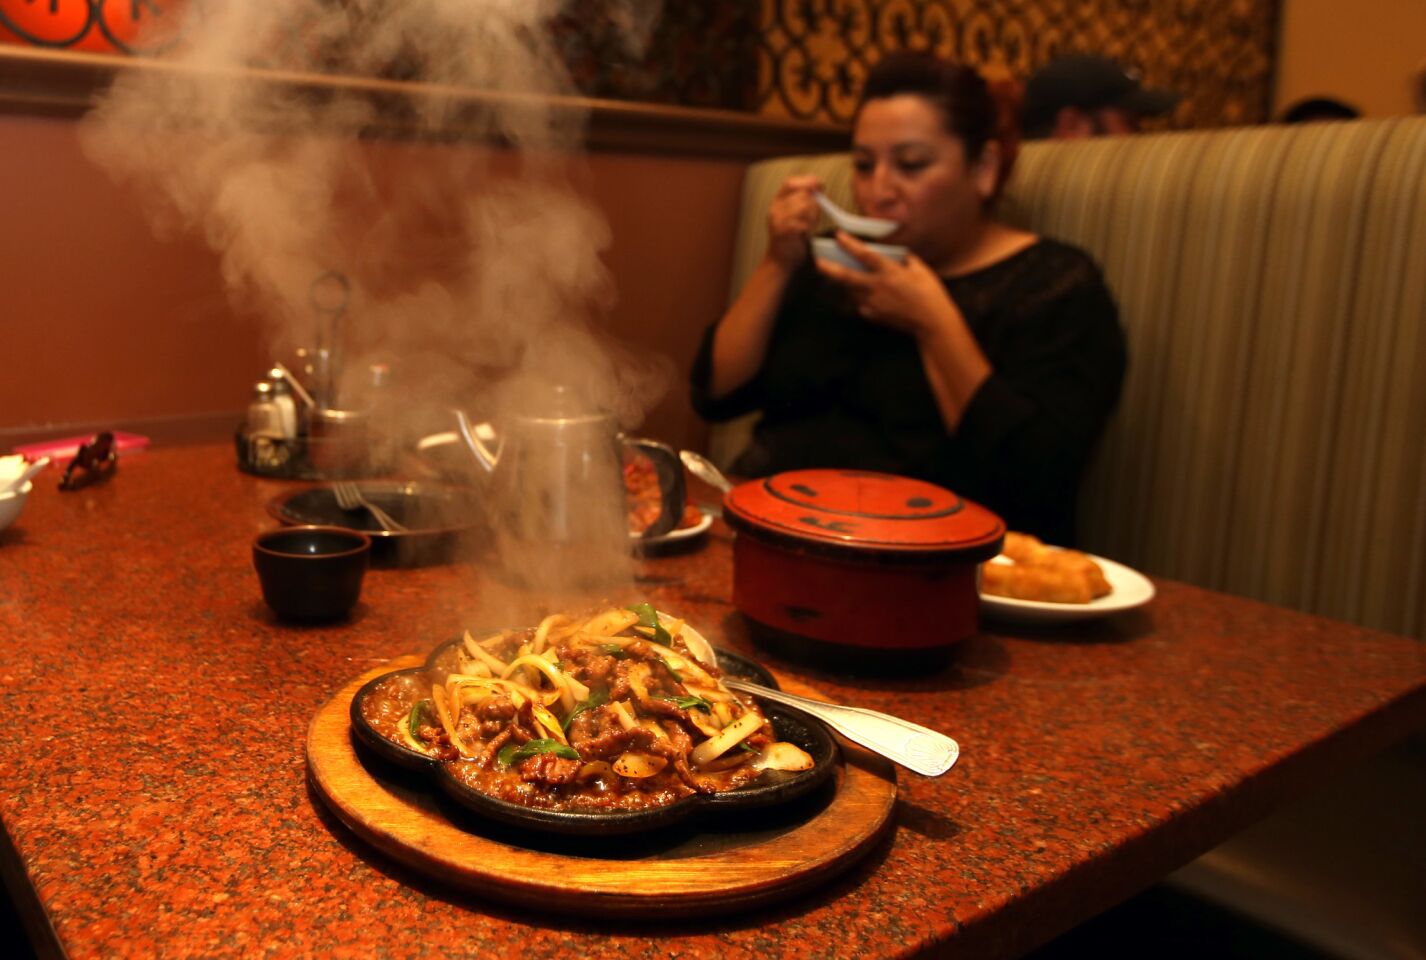 Jonathan Gold reviews Mas' Chinese Islamic Restaurant